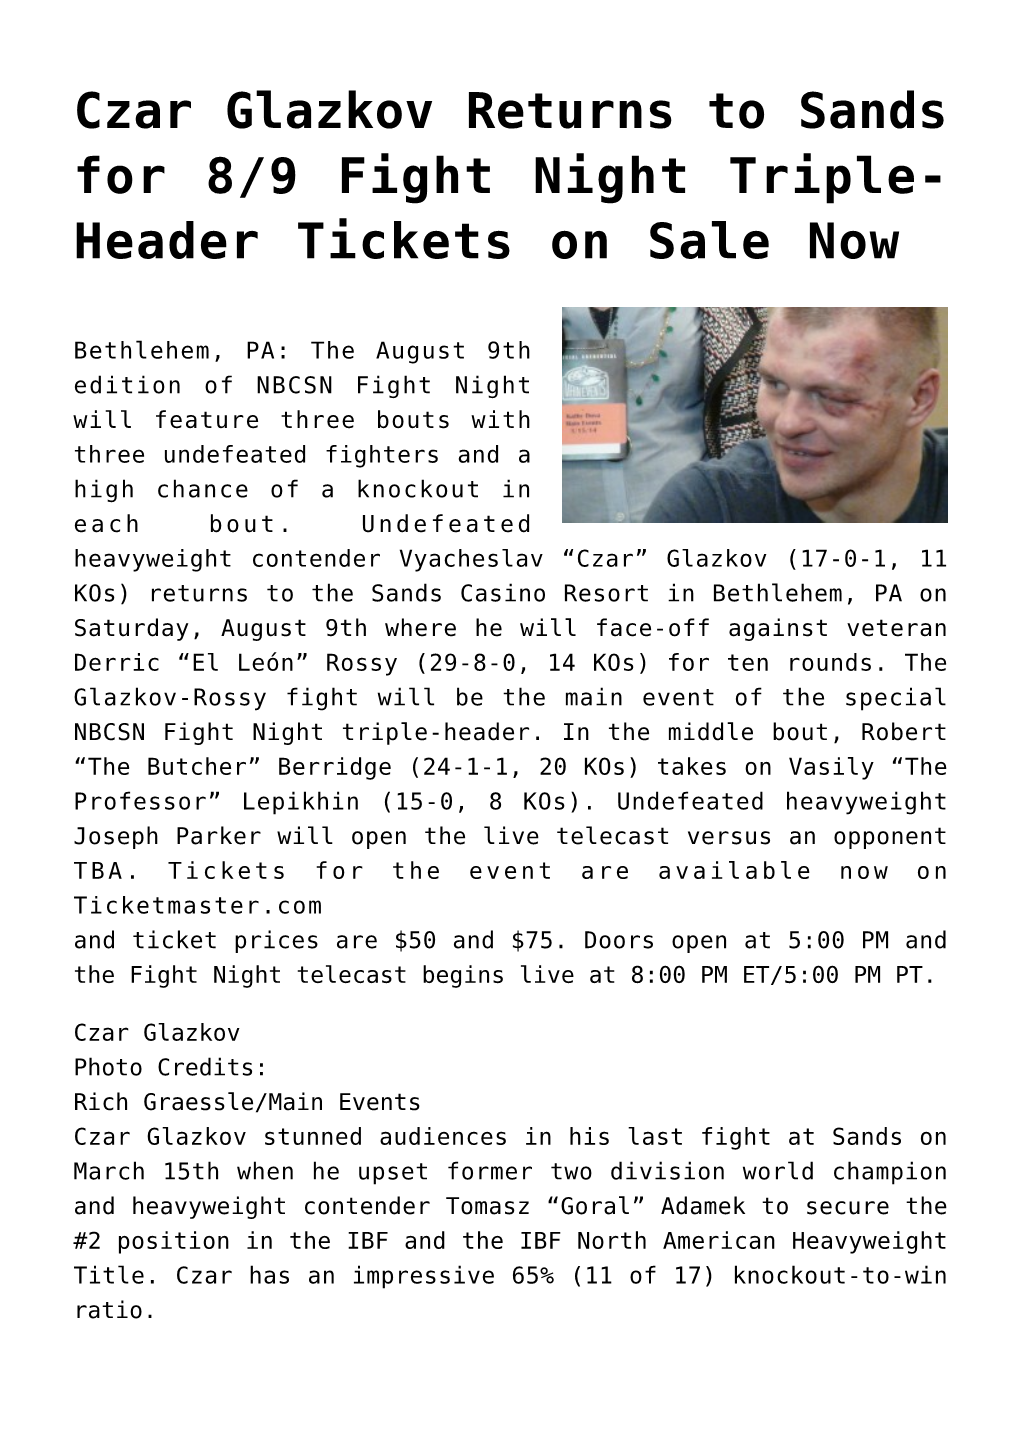 Czar Glazkov Returns to Sands for 8/9 Fight Night Triple-Header